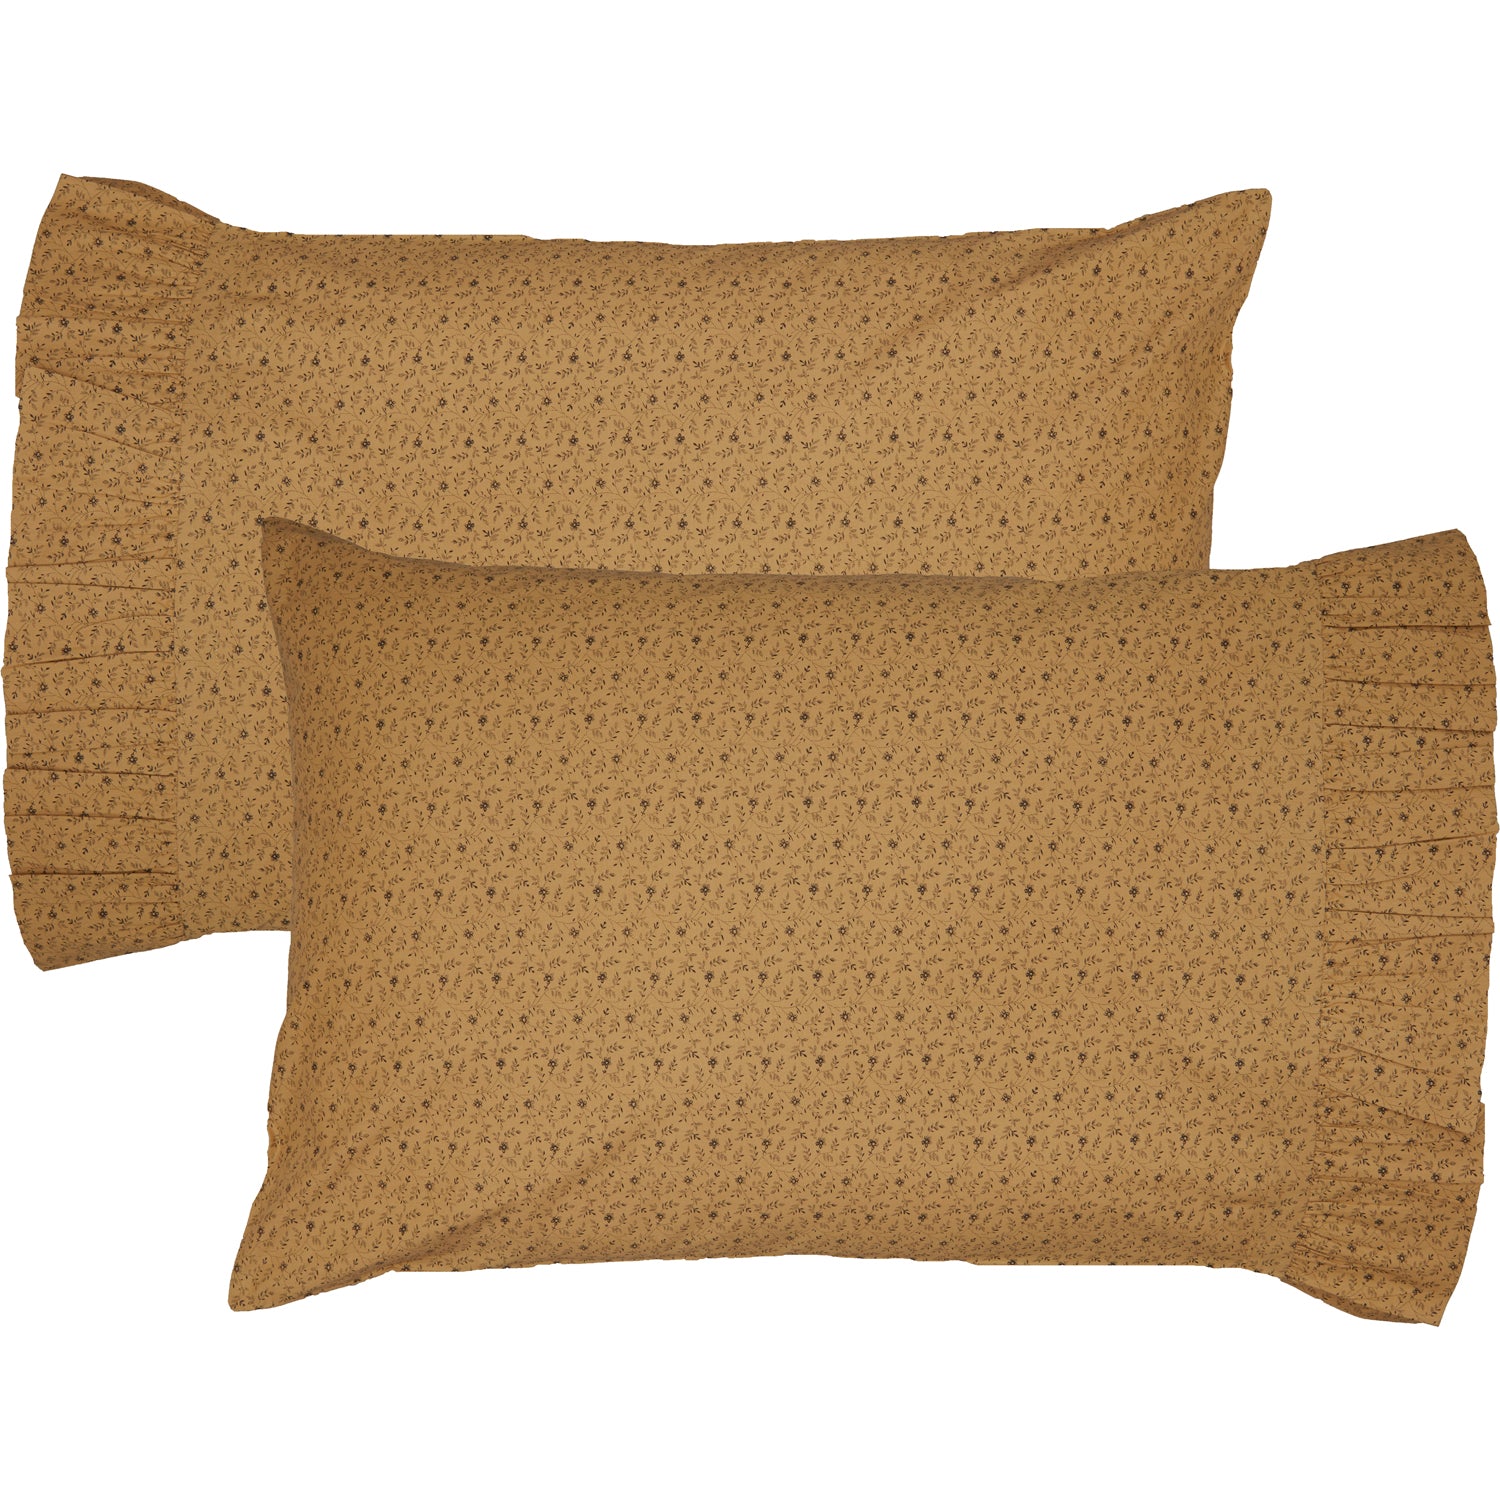 Mayflower Market Maisie Standard Pillow Case Set of 2 21x30 By VHC Brands